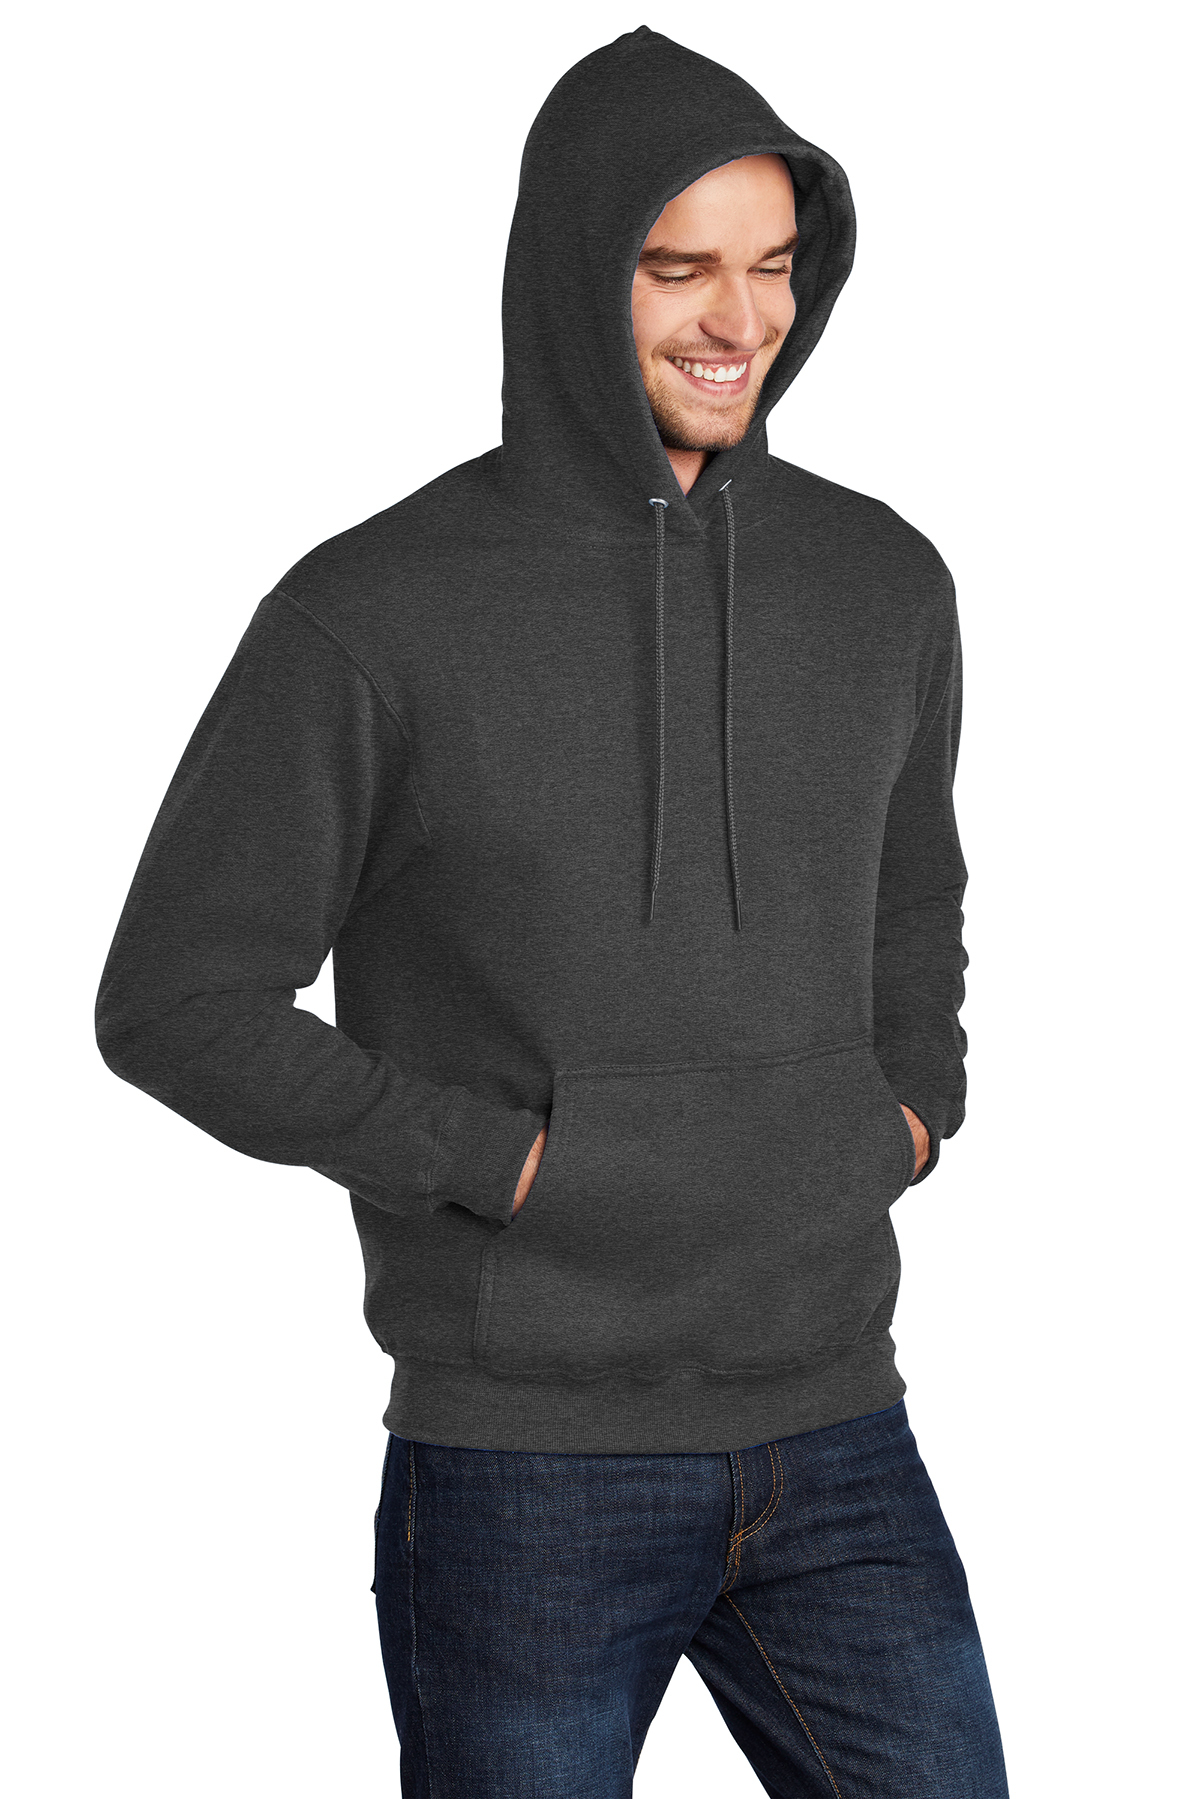 Port & Company Tall Core Fleece Pullover Hooded Sweatshirt | Product ...